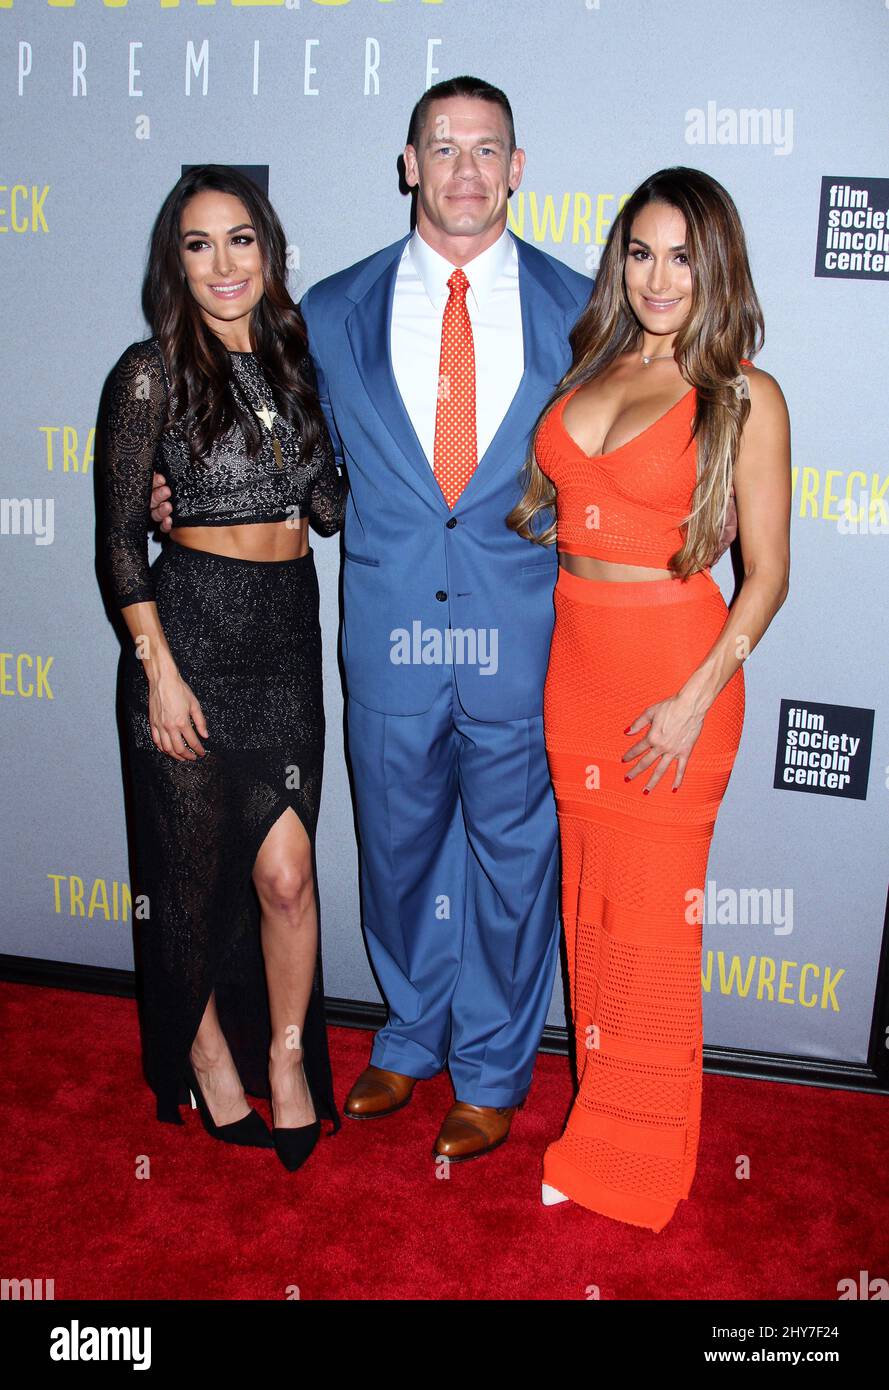 Brie Bella, John Cena and Nikki Bella attending the premiere of Trainwreck in New York. Stock Photo